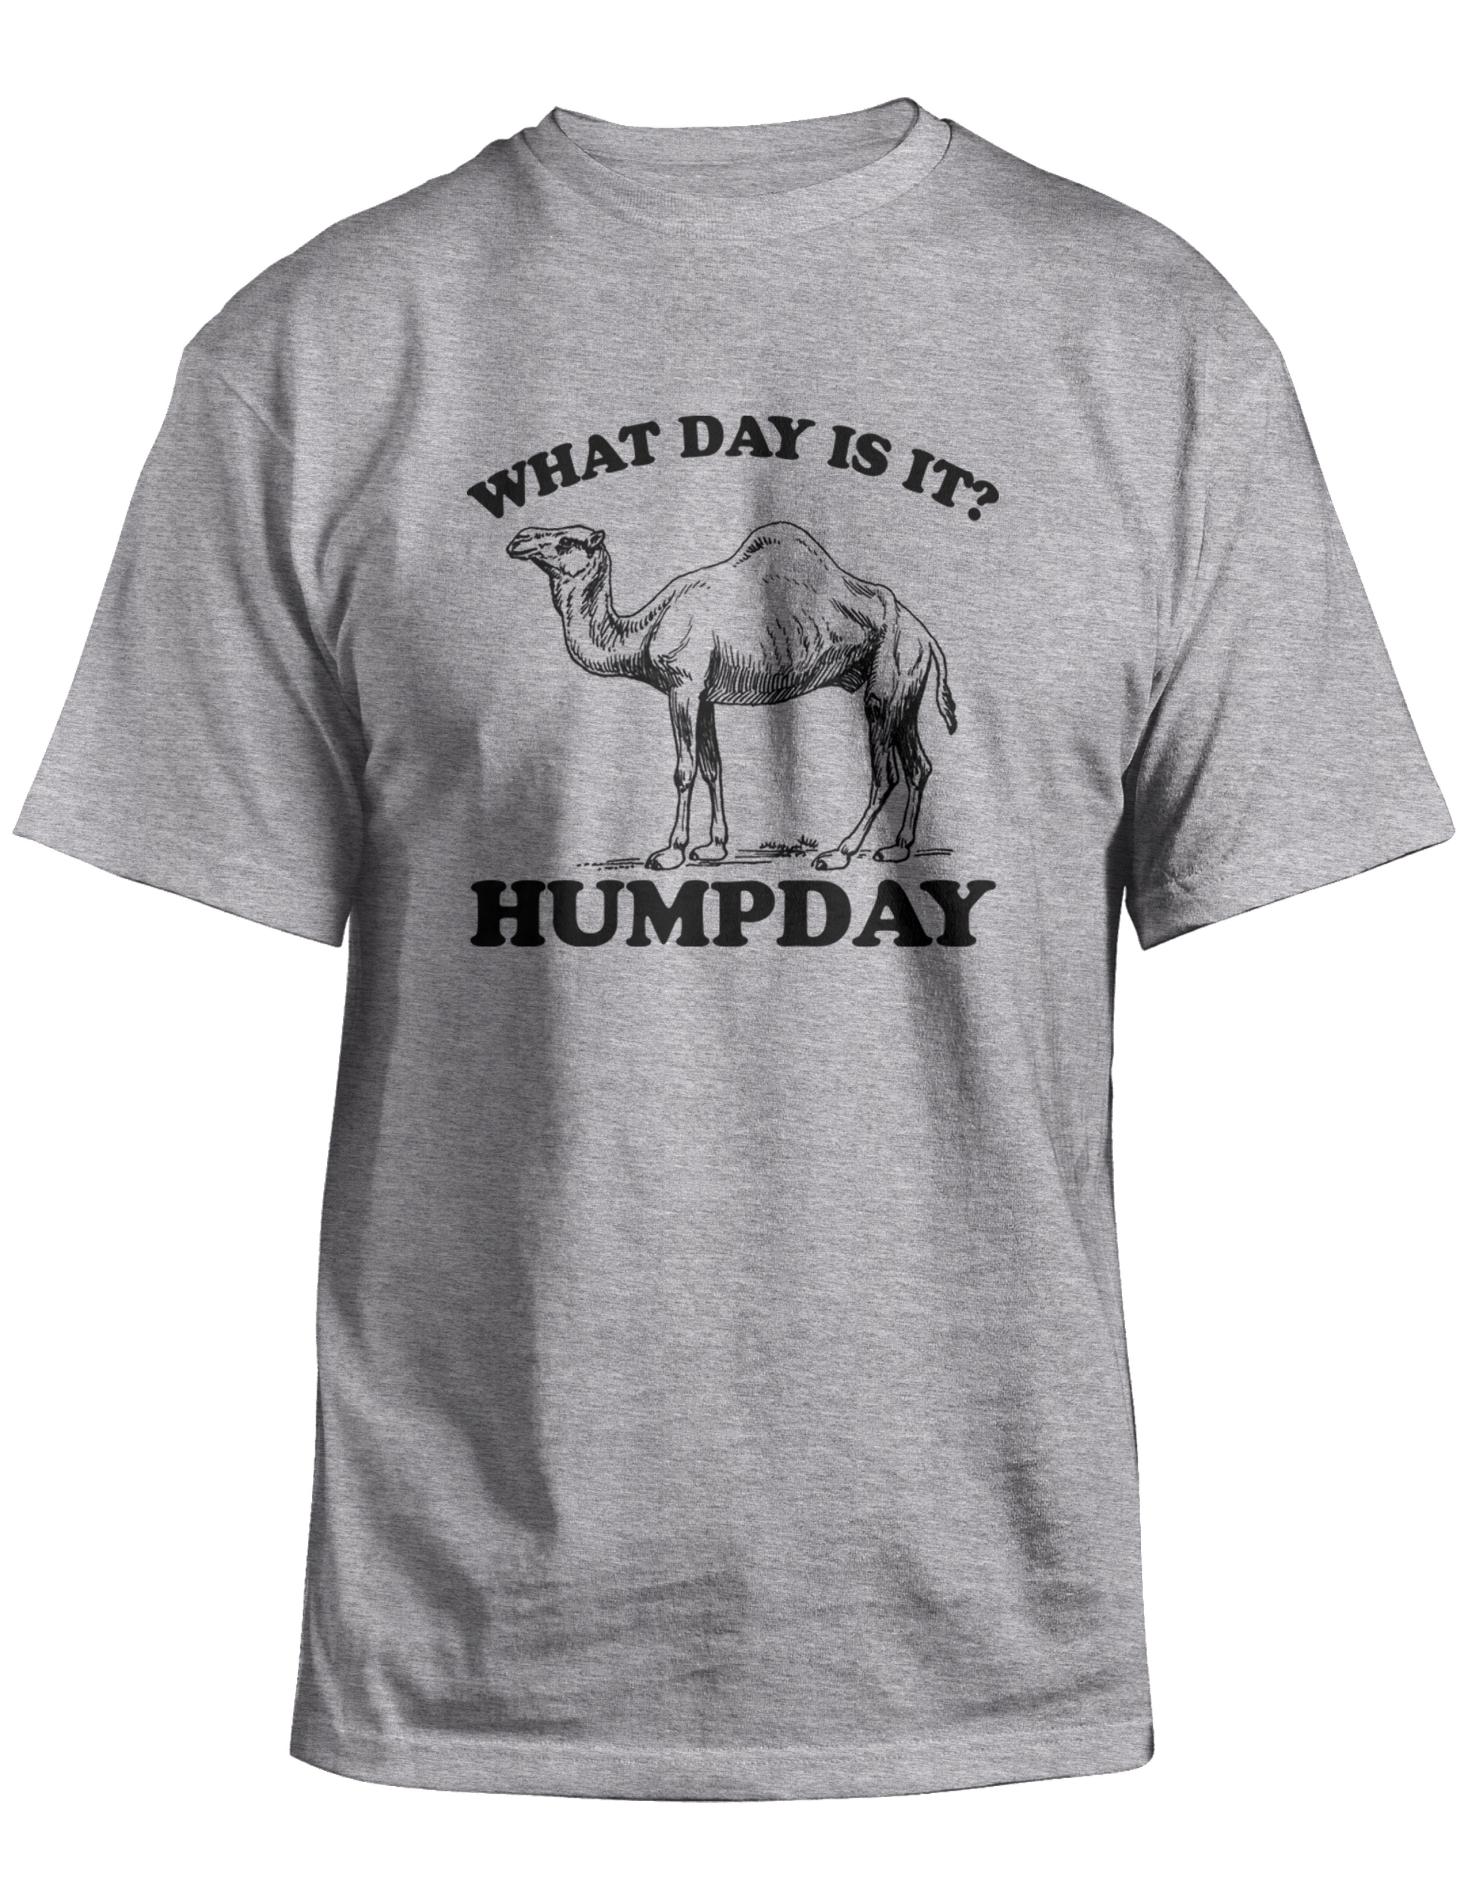 Men's Big & Tall Graphic T-Shirt - Humpday